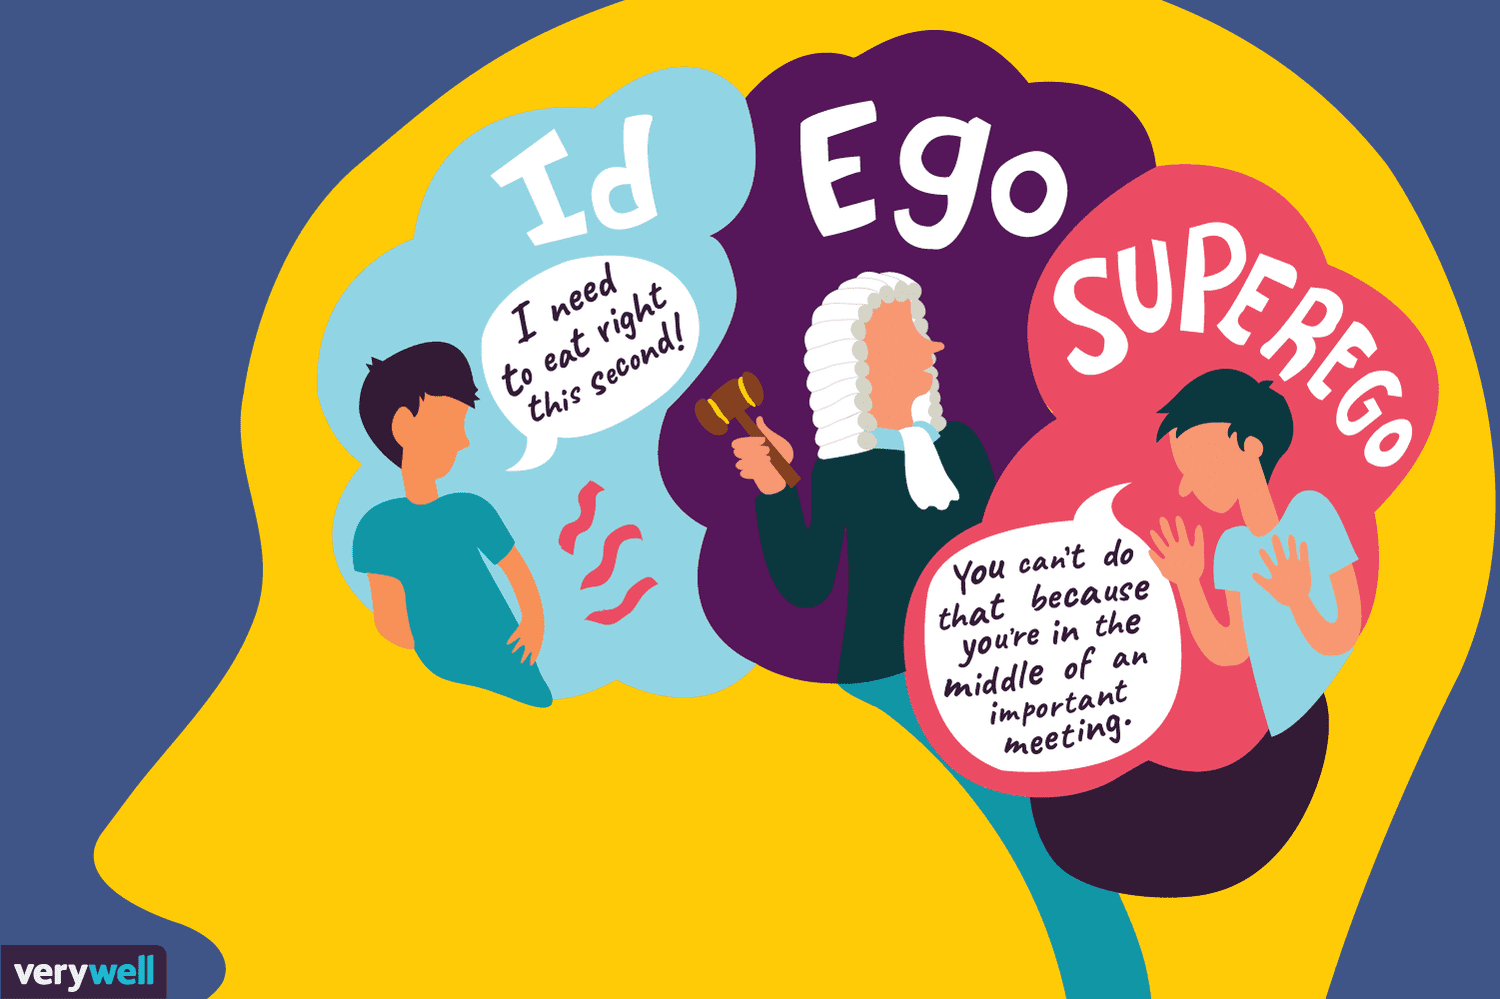 Id ego superego แนวคิดทางจิตวิทยาที่เกี่ยวข้องกับทฤษฎีของซิกมันด์ ฟอยด์